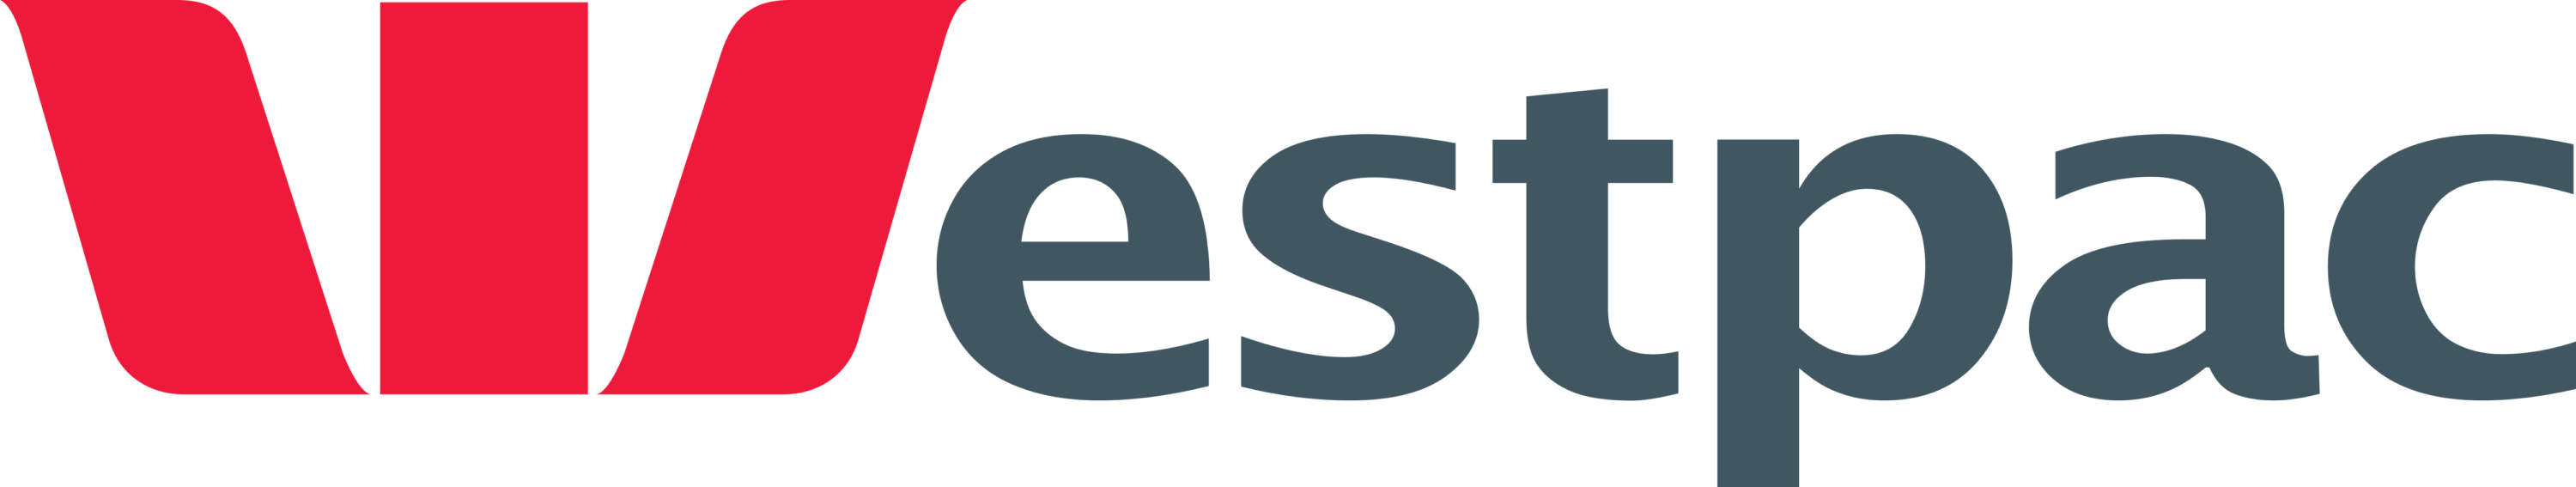 Westpac Logo 2003